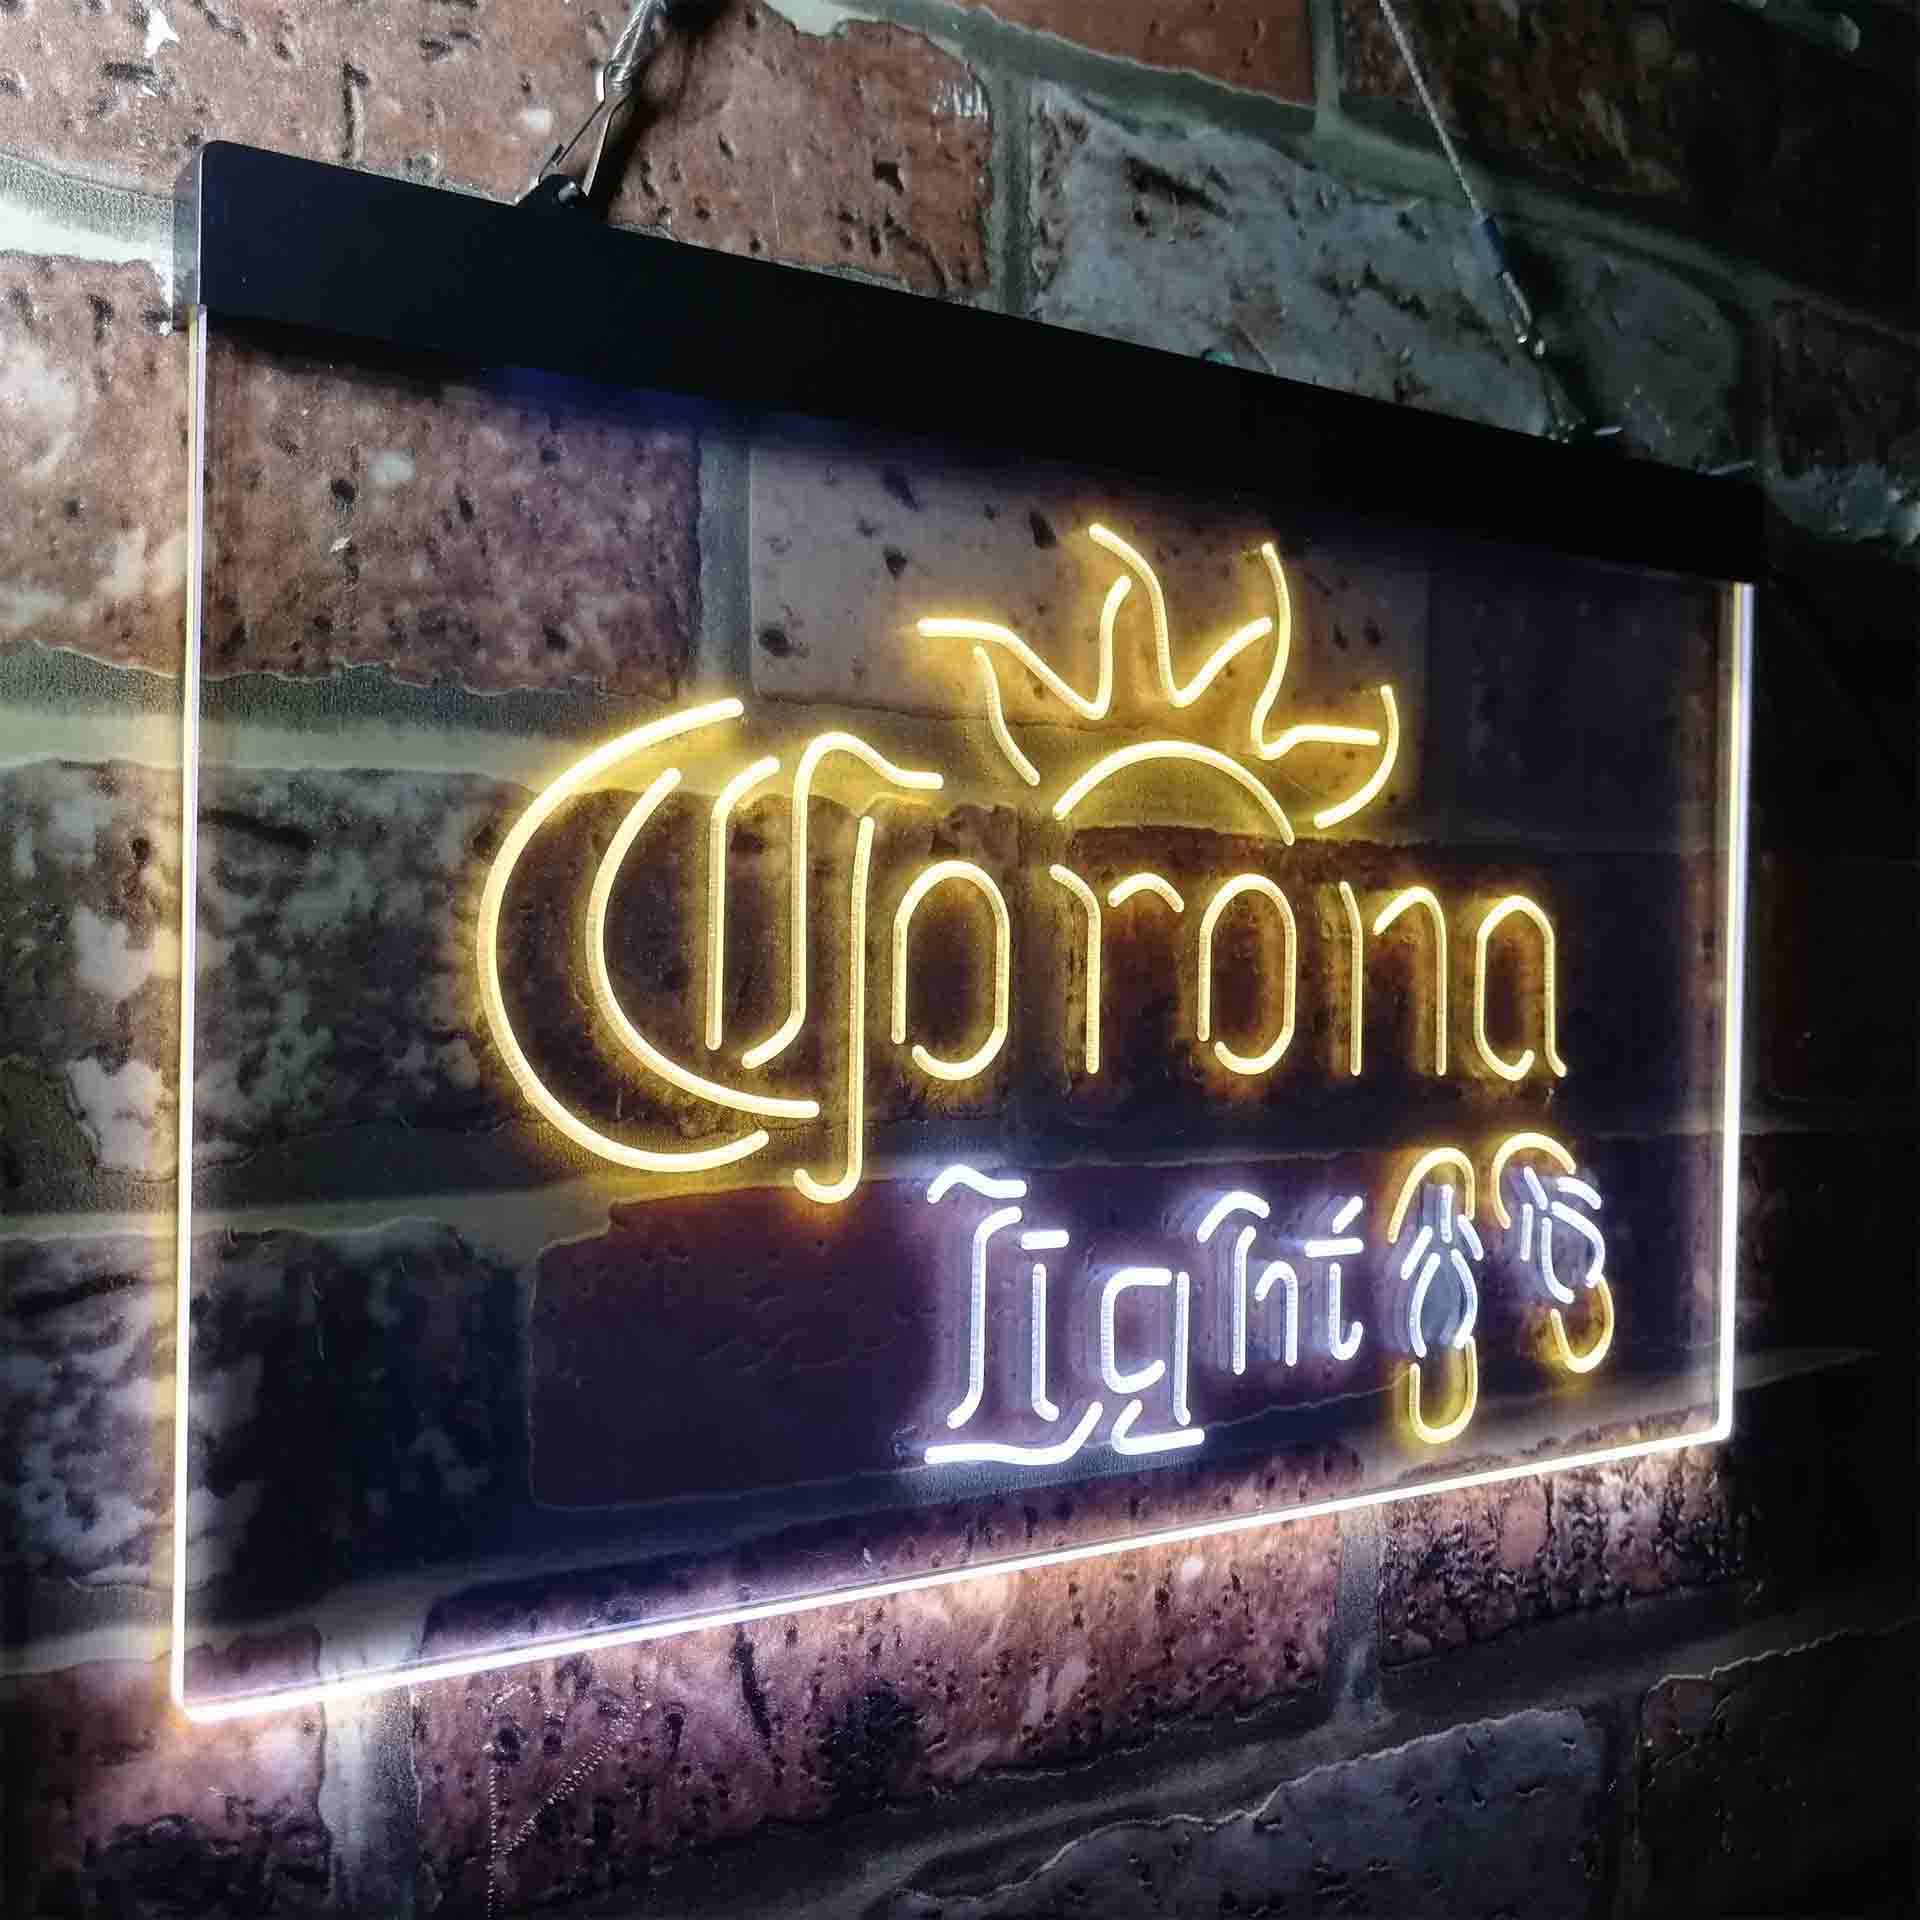 Corona Light Flip Flop Beach Neon-Like LED Sign